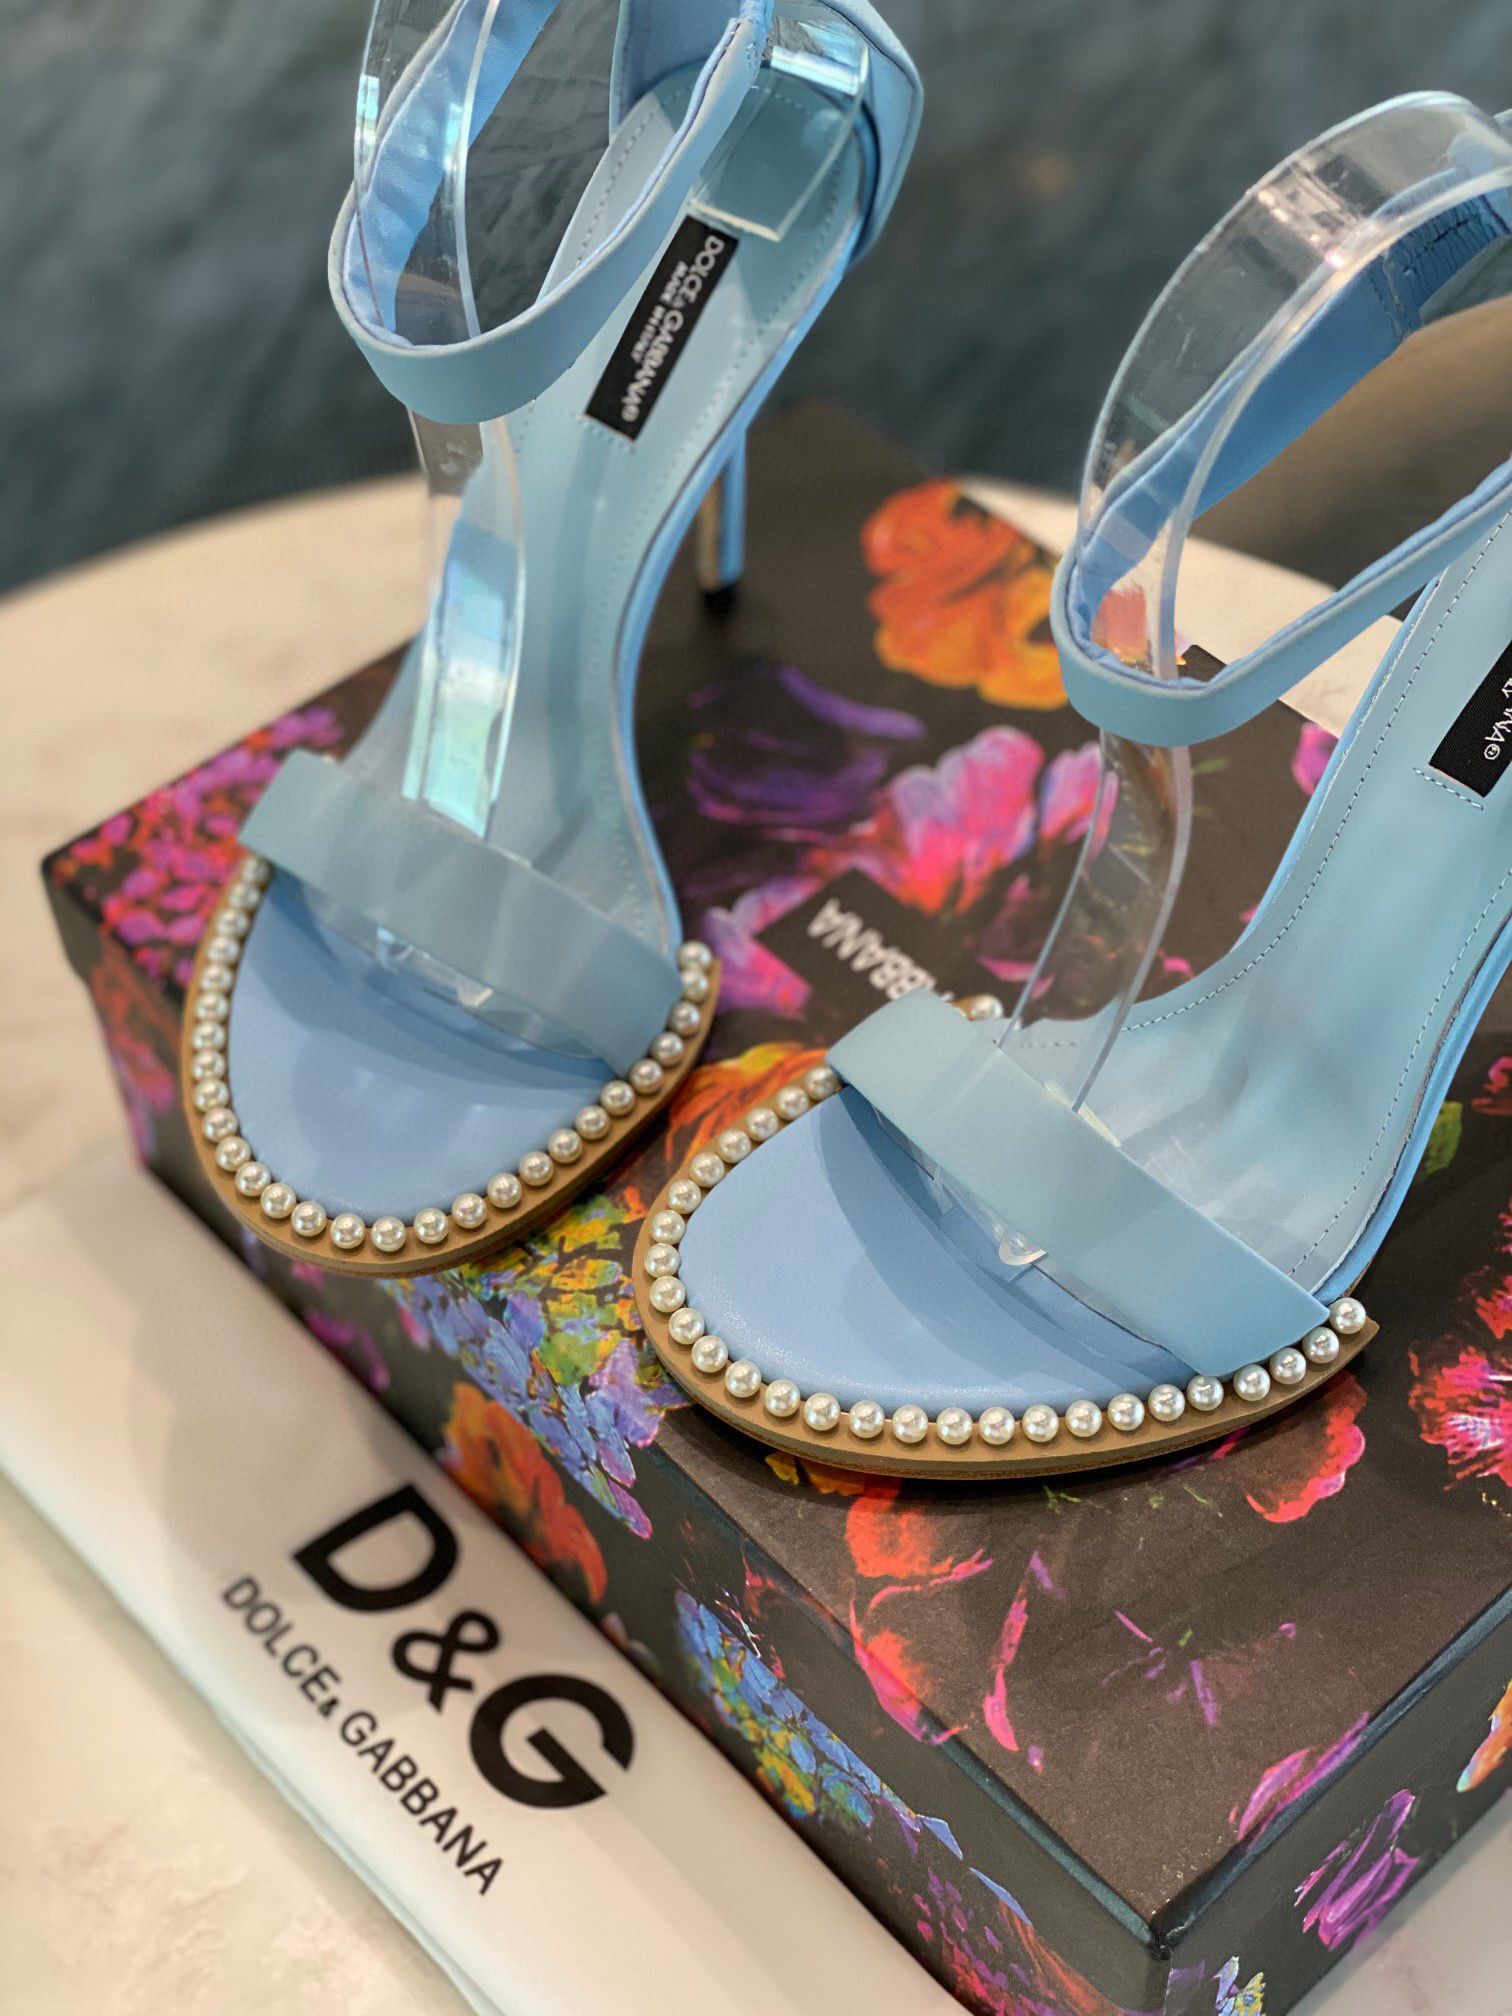 Dolce & Gabbana Sandals Shoes DG4518 Heel height 9CM